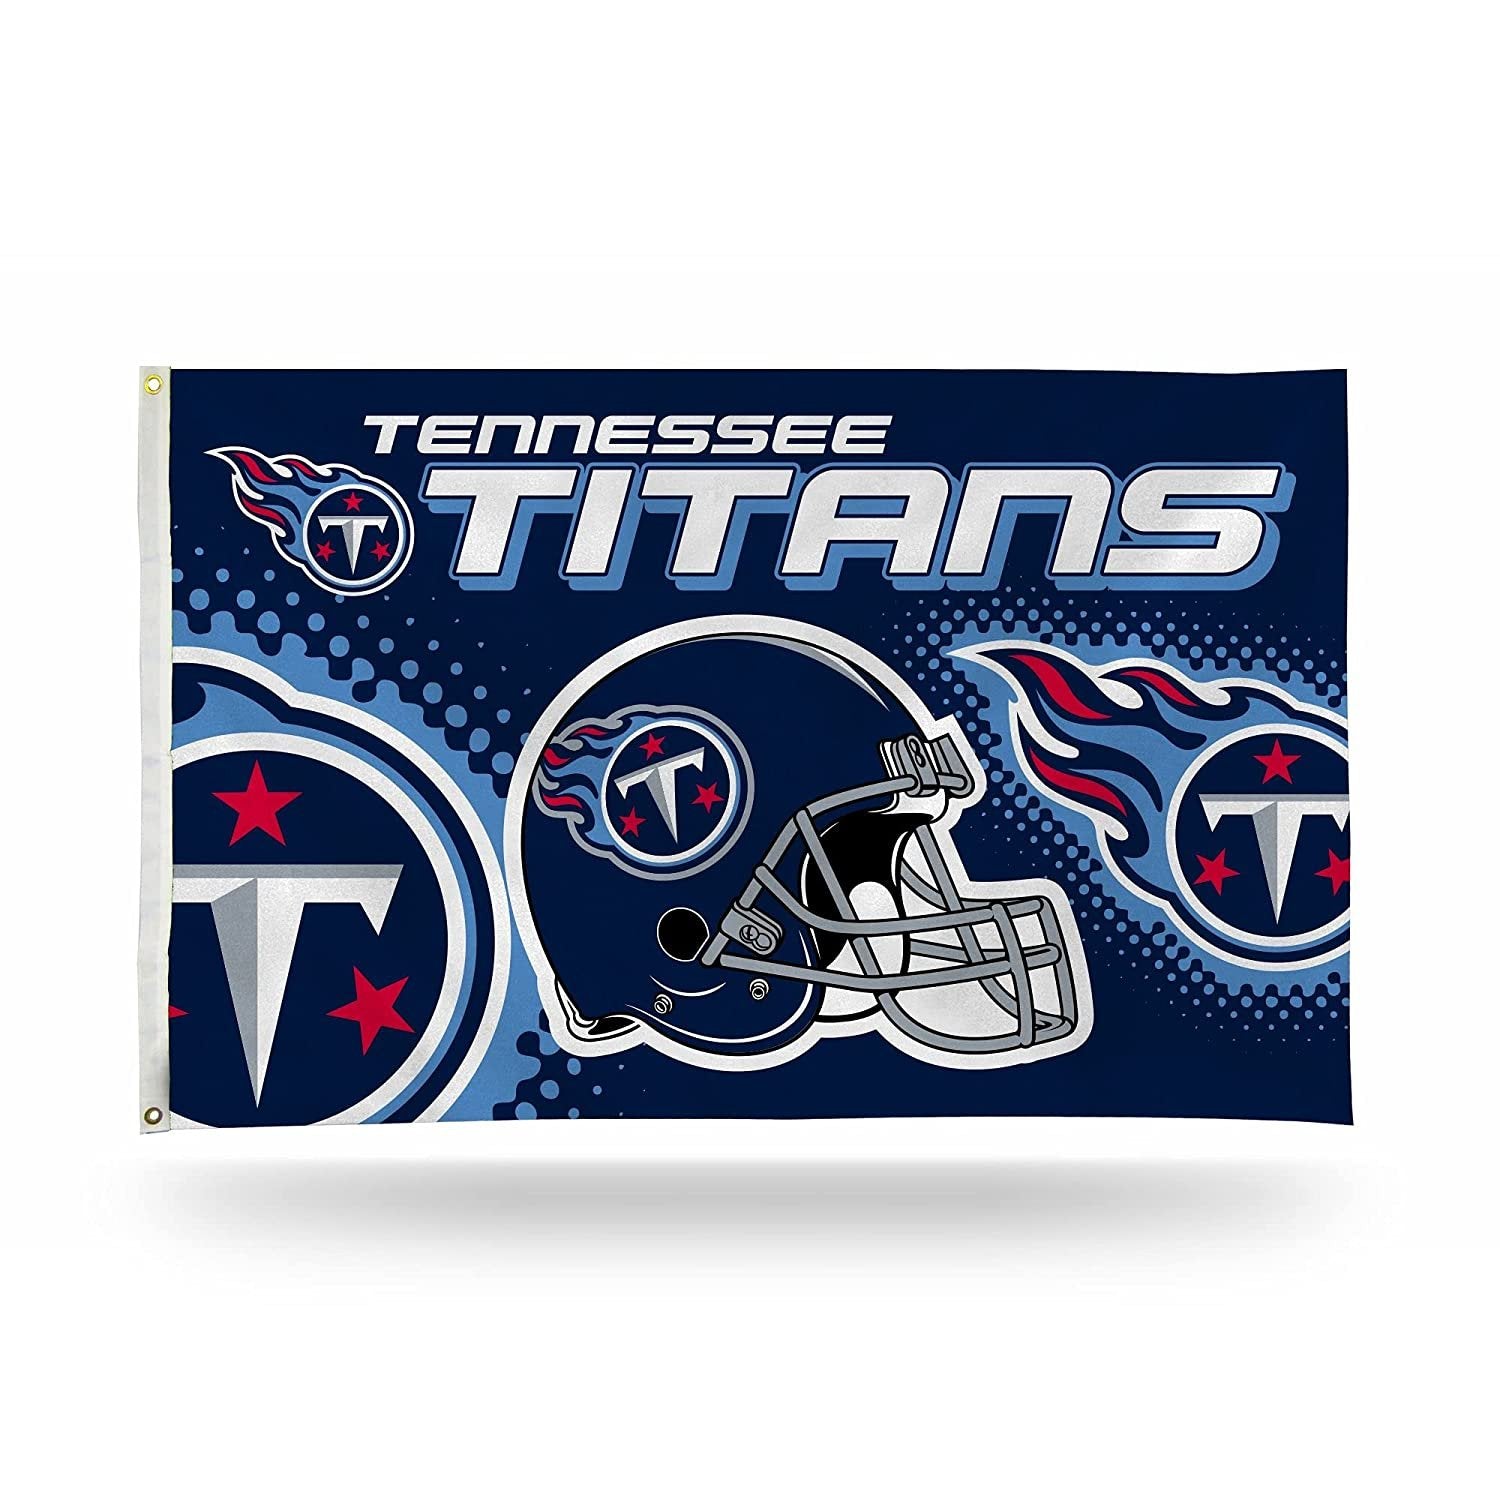 Tennessee Titans Premium 3x5 Feet Flag Banner, Helmet Design, Metal Grommets, Outdoor Use, Single Sided